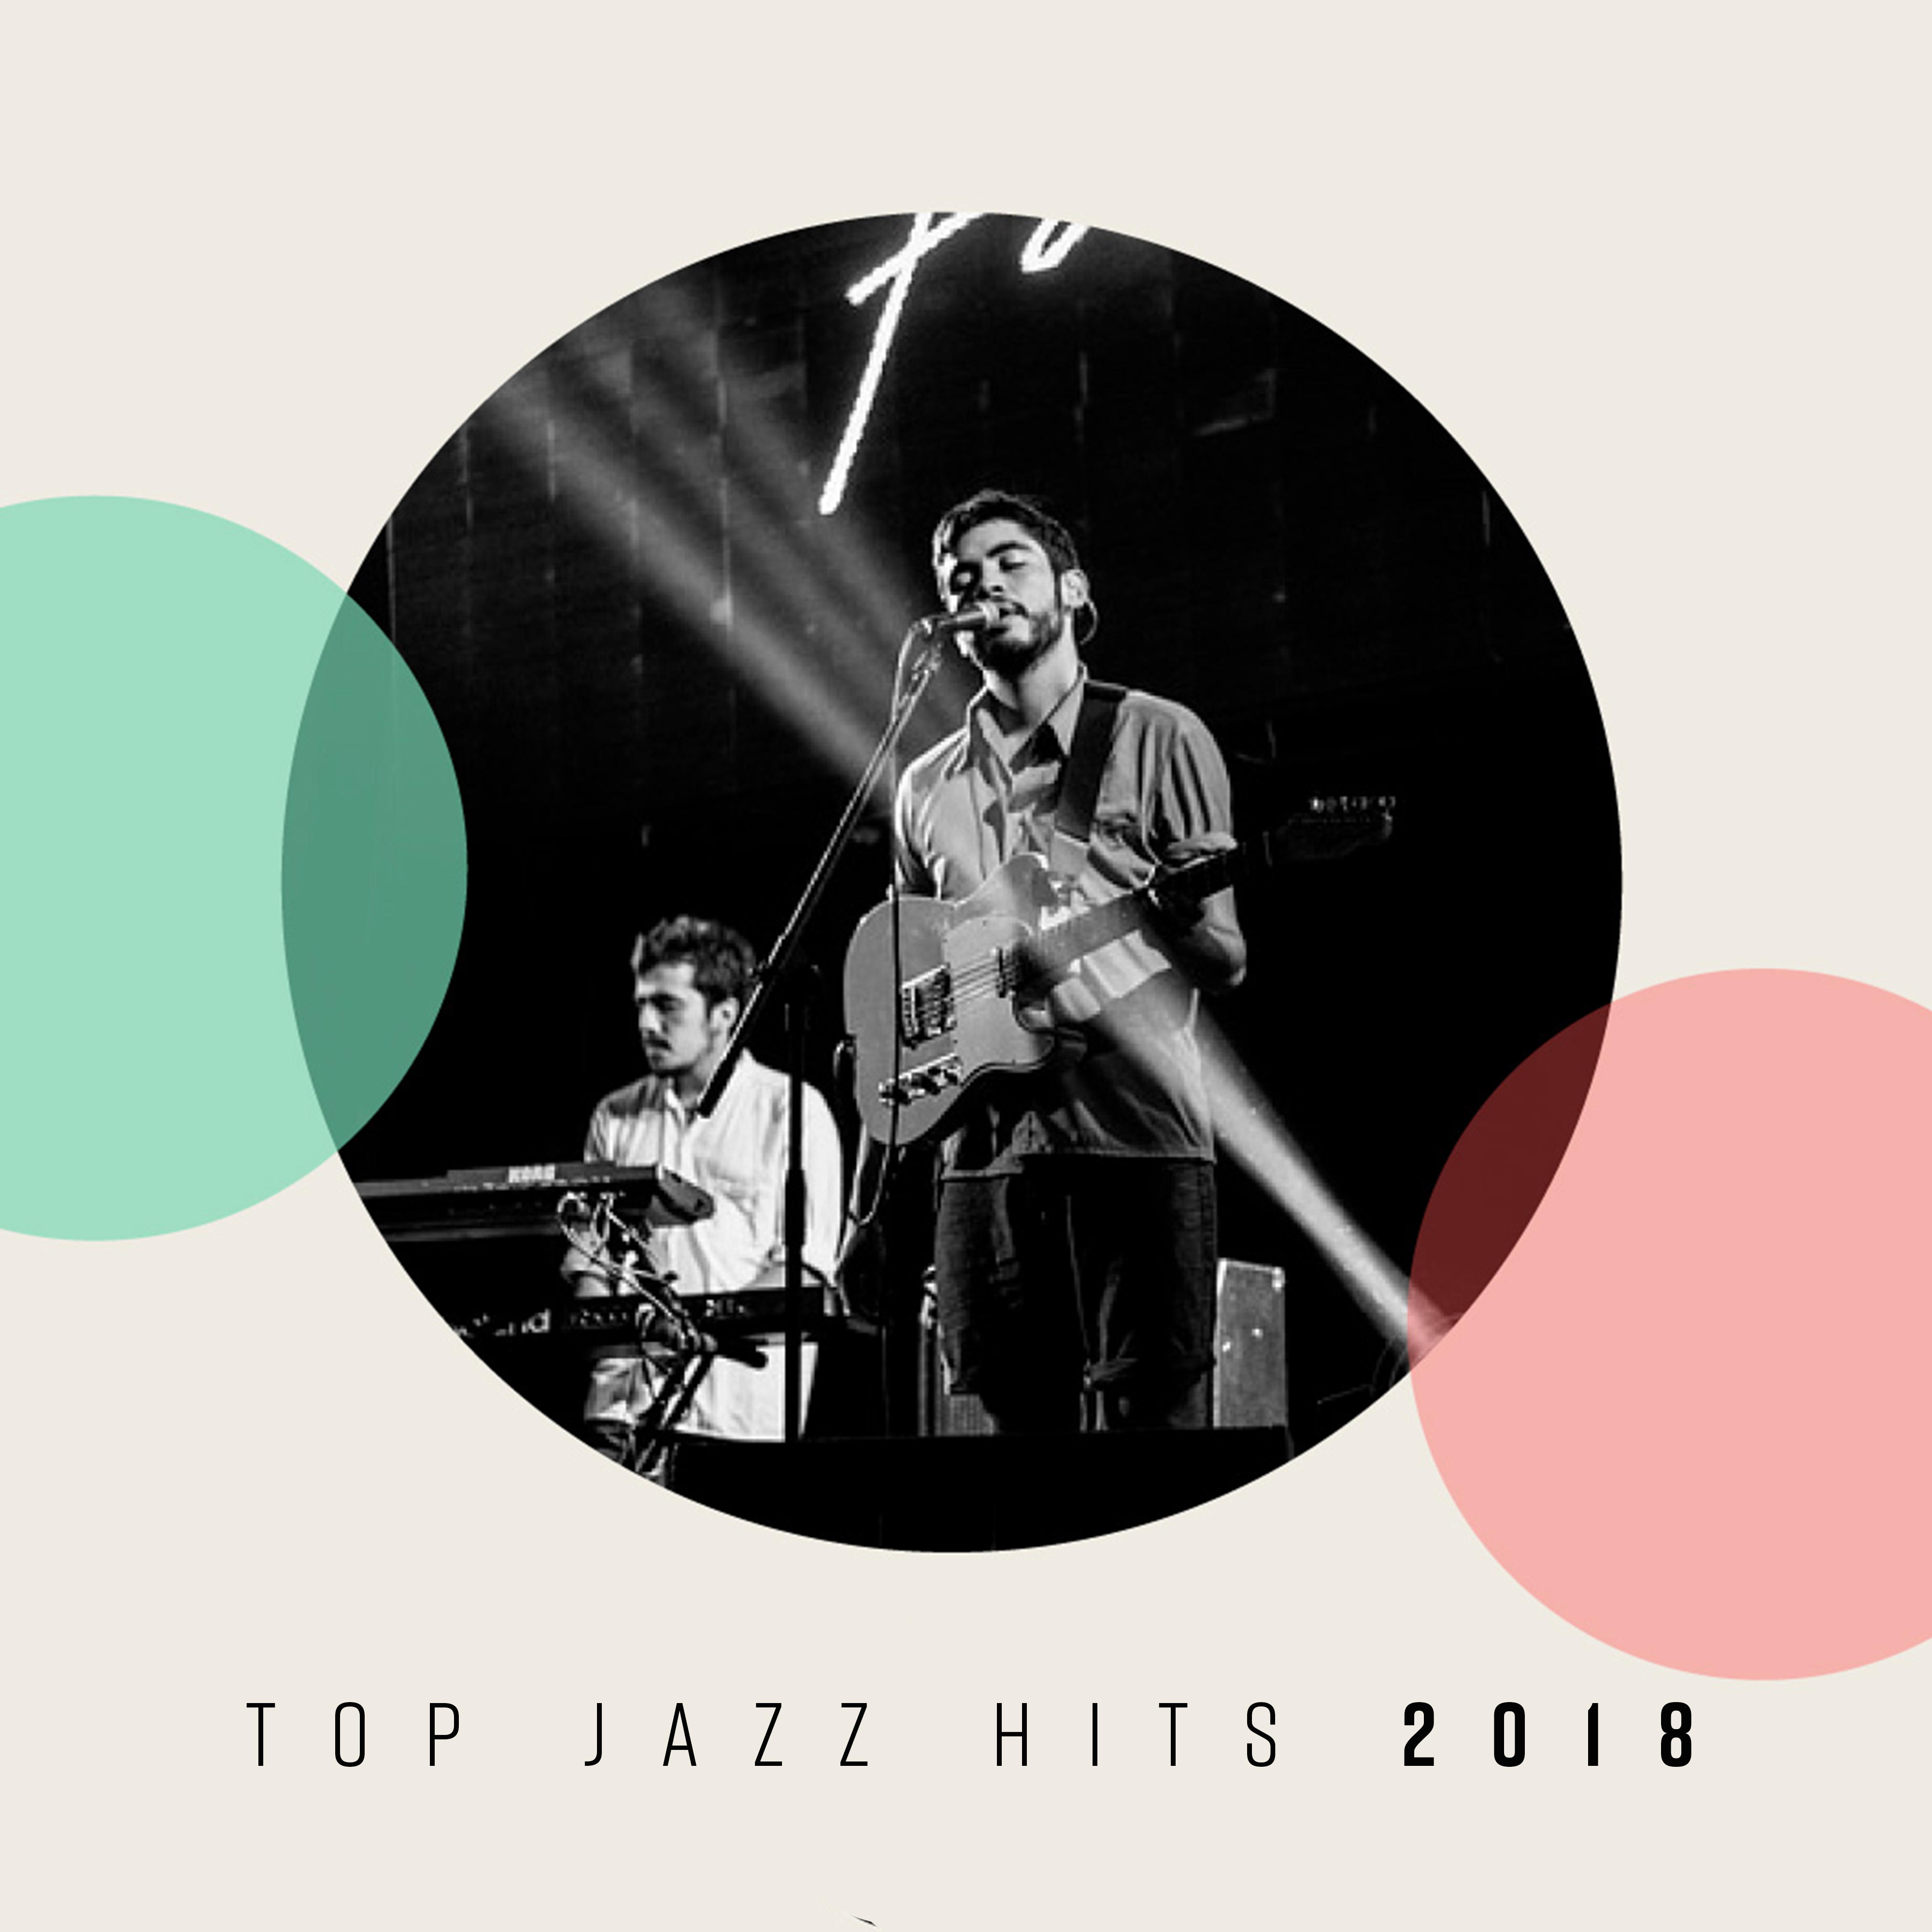 Top Jazz Hits 2018